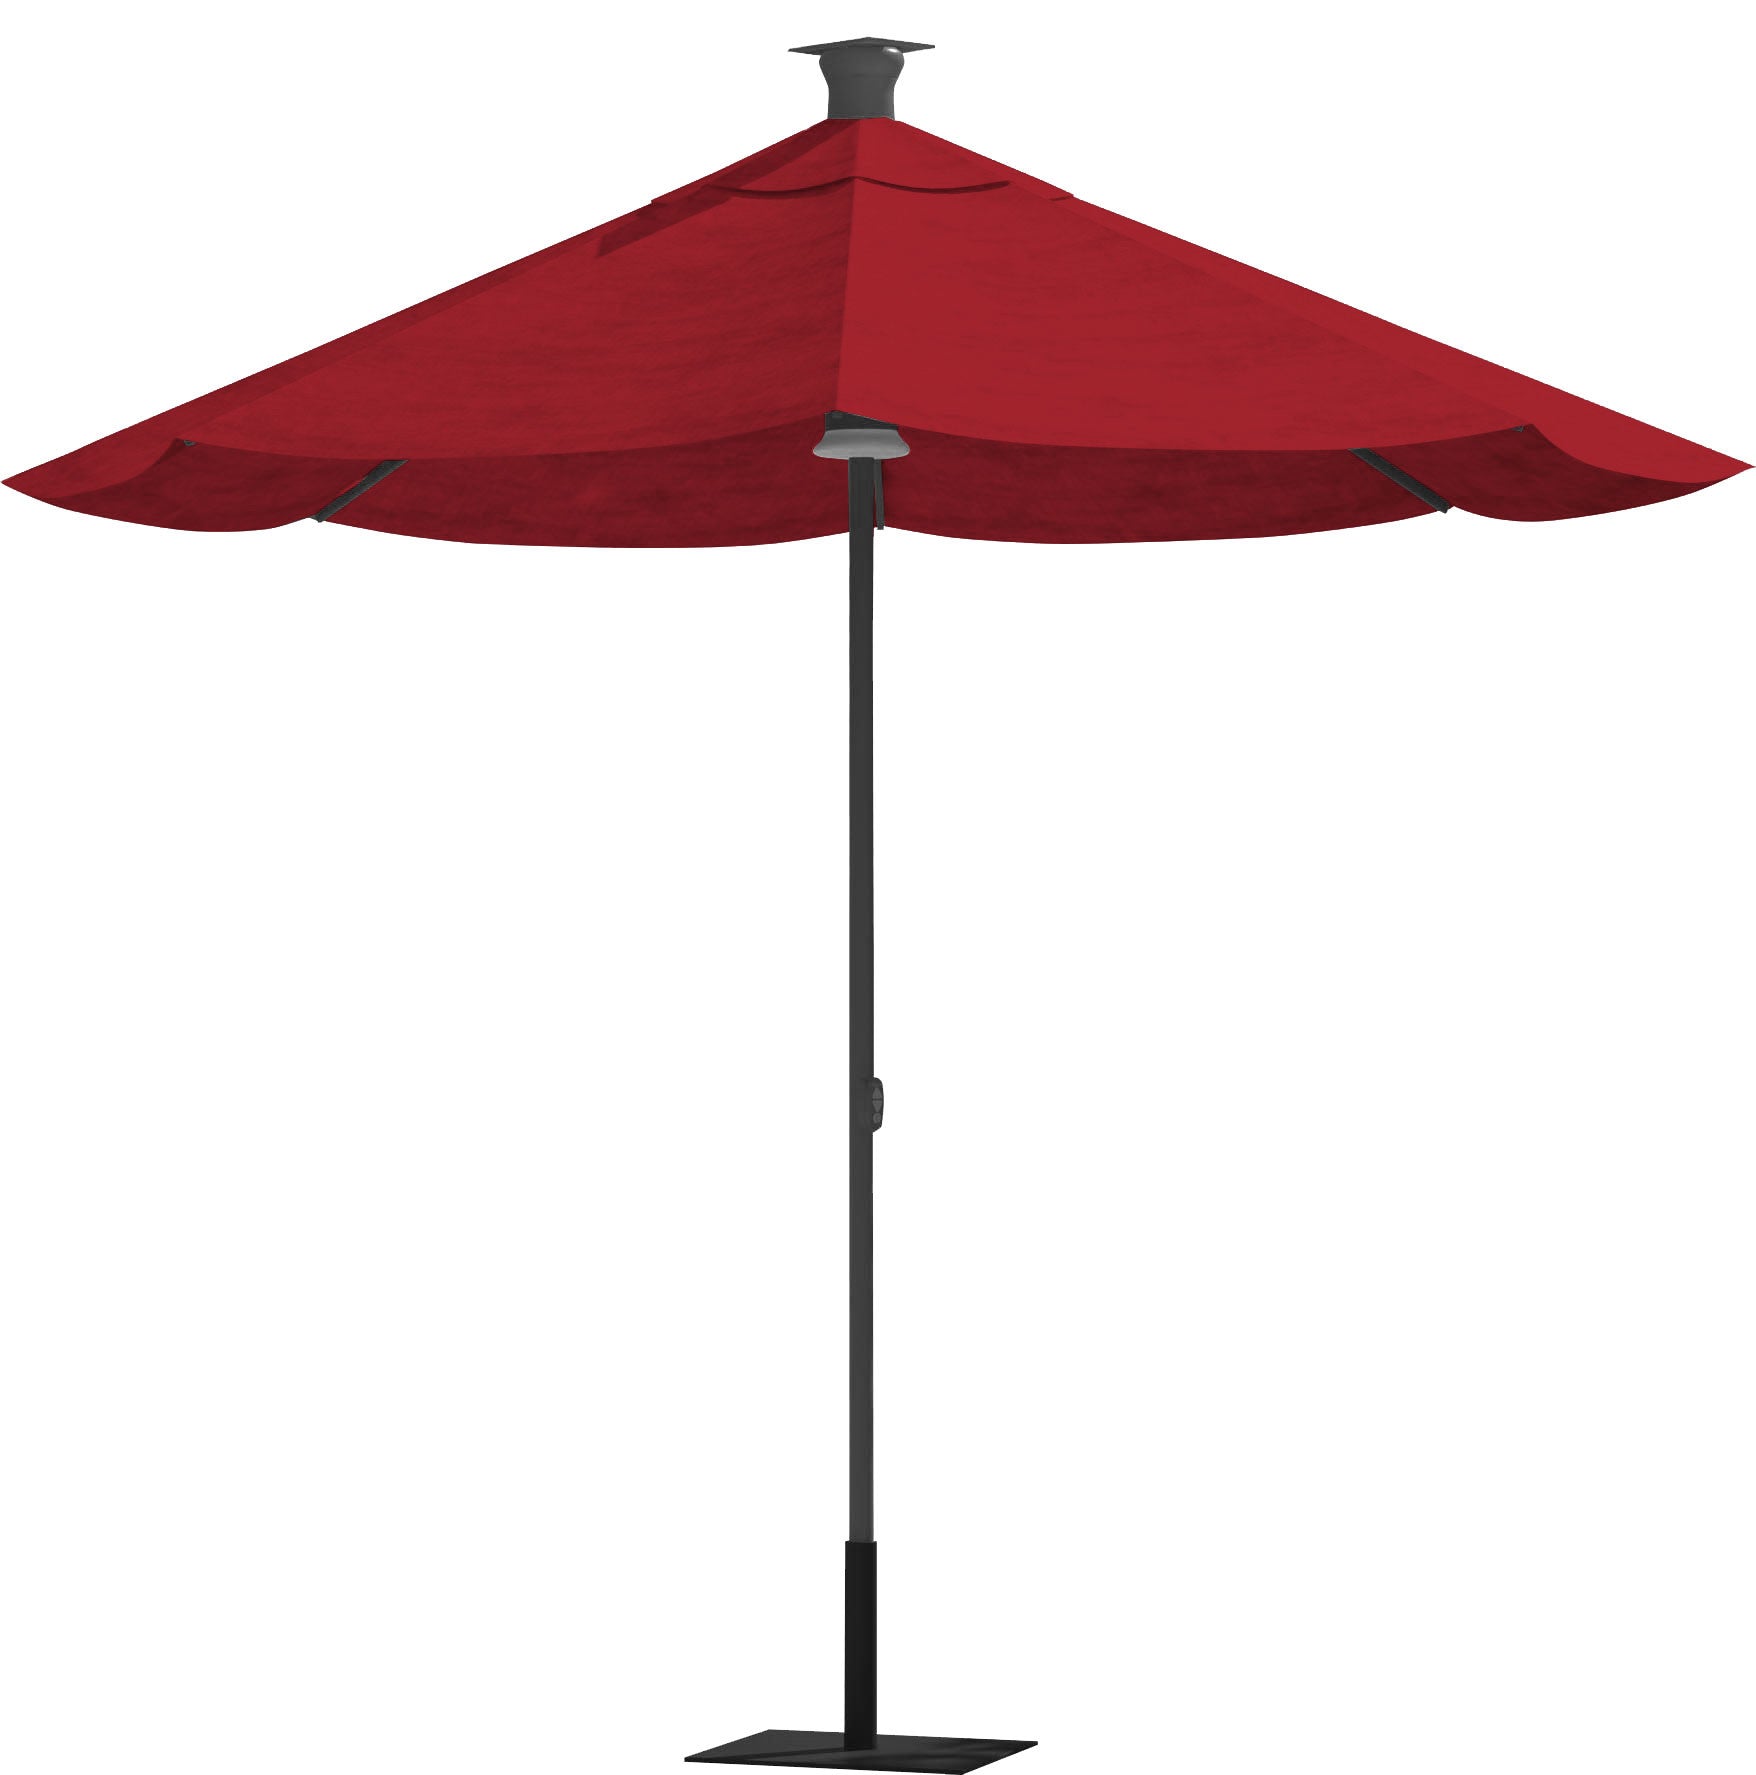 9' Red Sunbrella Octagonal Lighted Market Patio Umbrella with USB and Solar Power